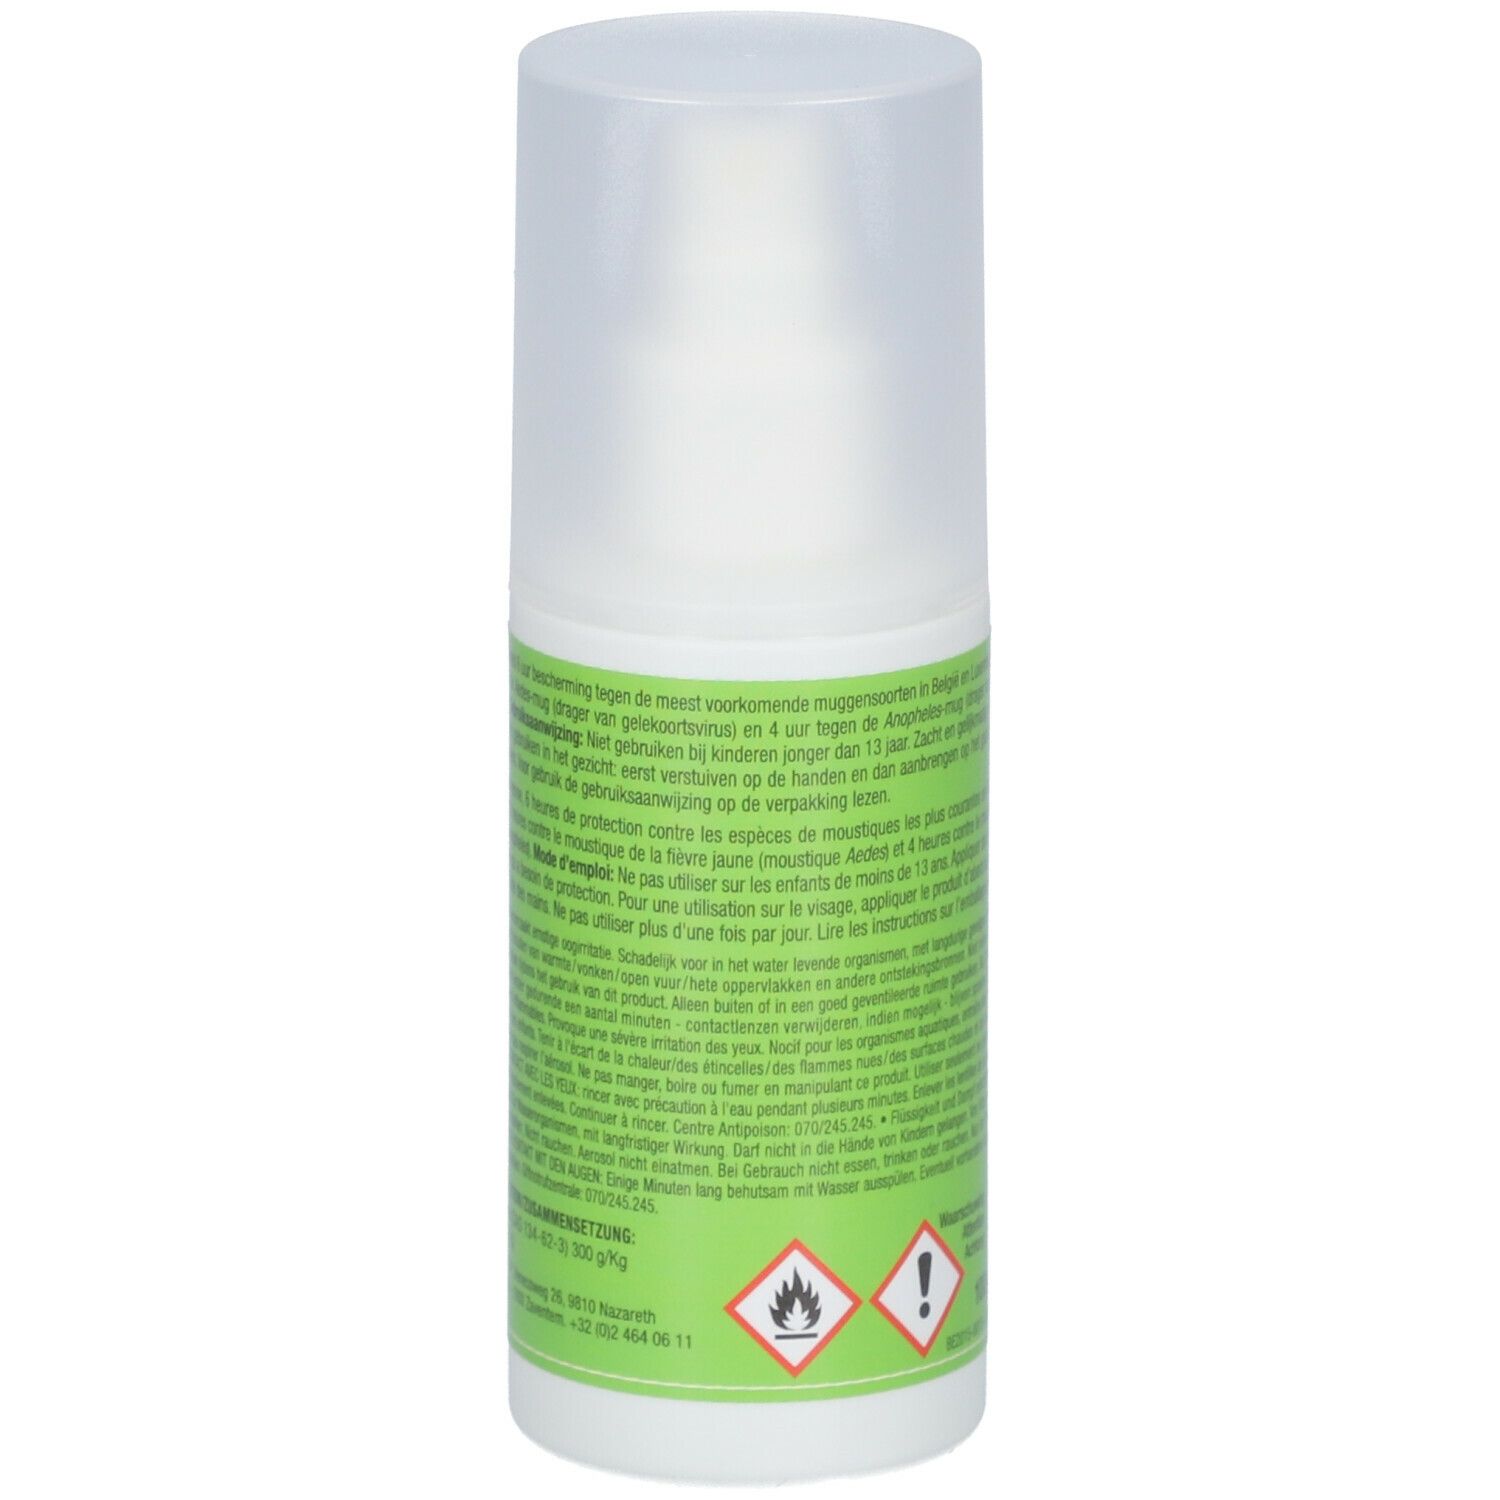 Moustimug Tropical Spray 30% DEET